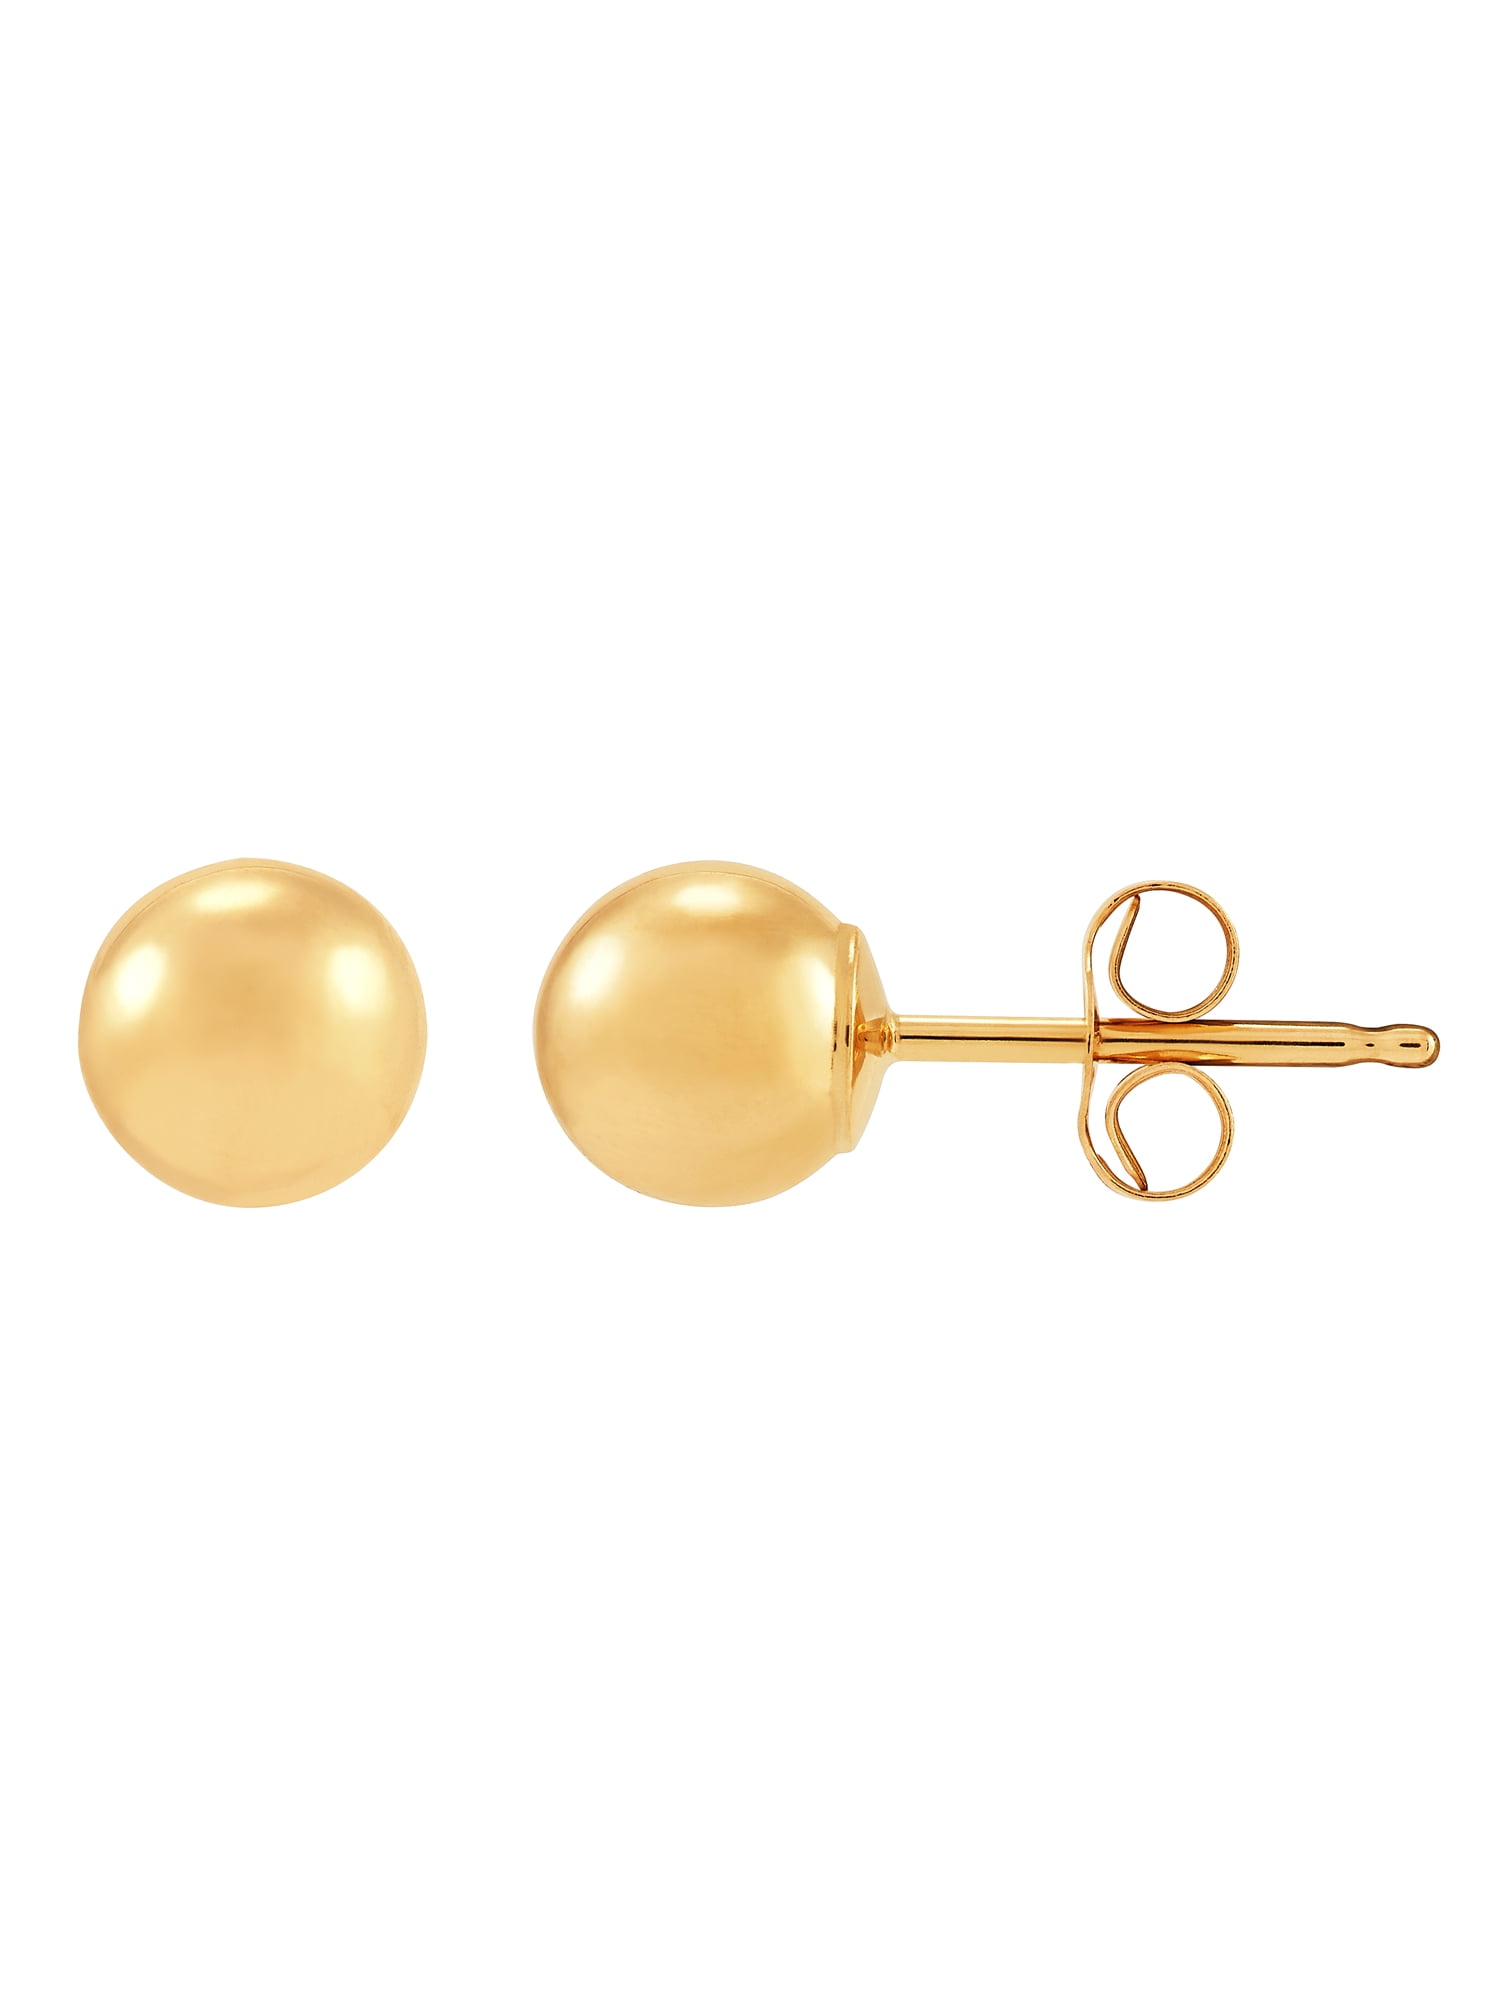 5mm Ball Children's Jewelry Secure Screw Back Stud Earrings 10K Yellow Gold 